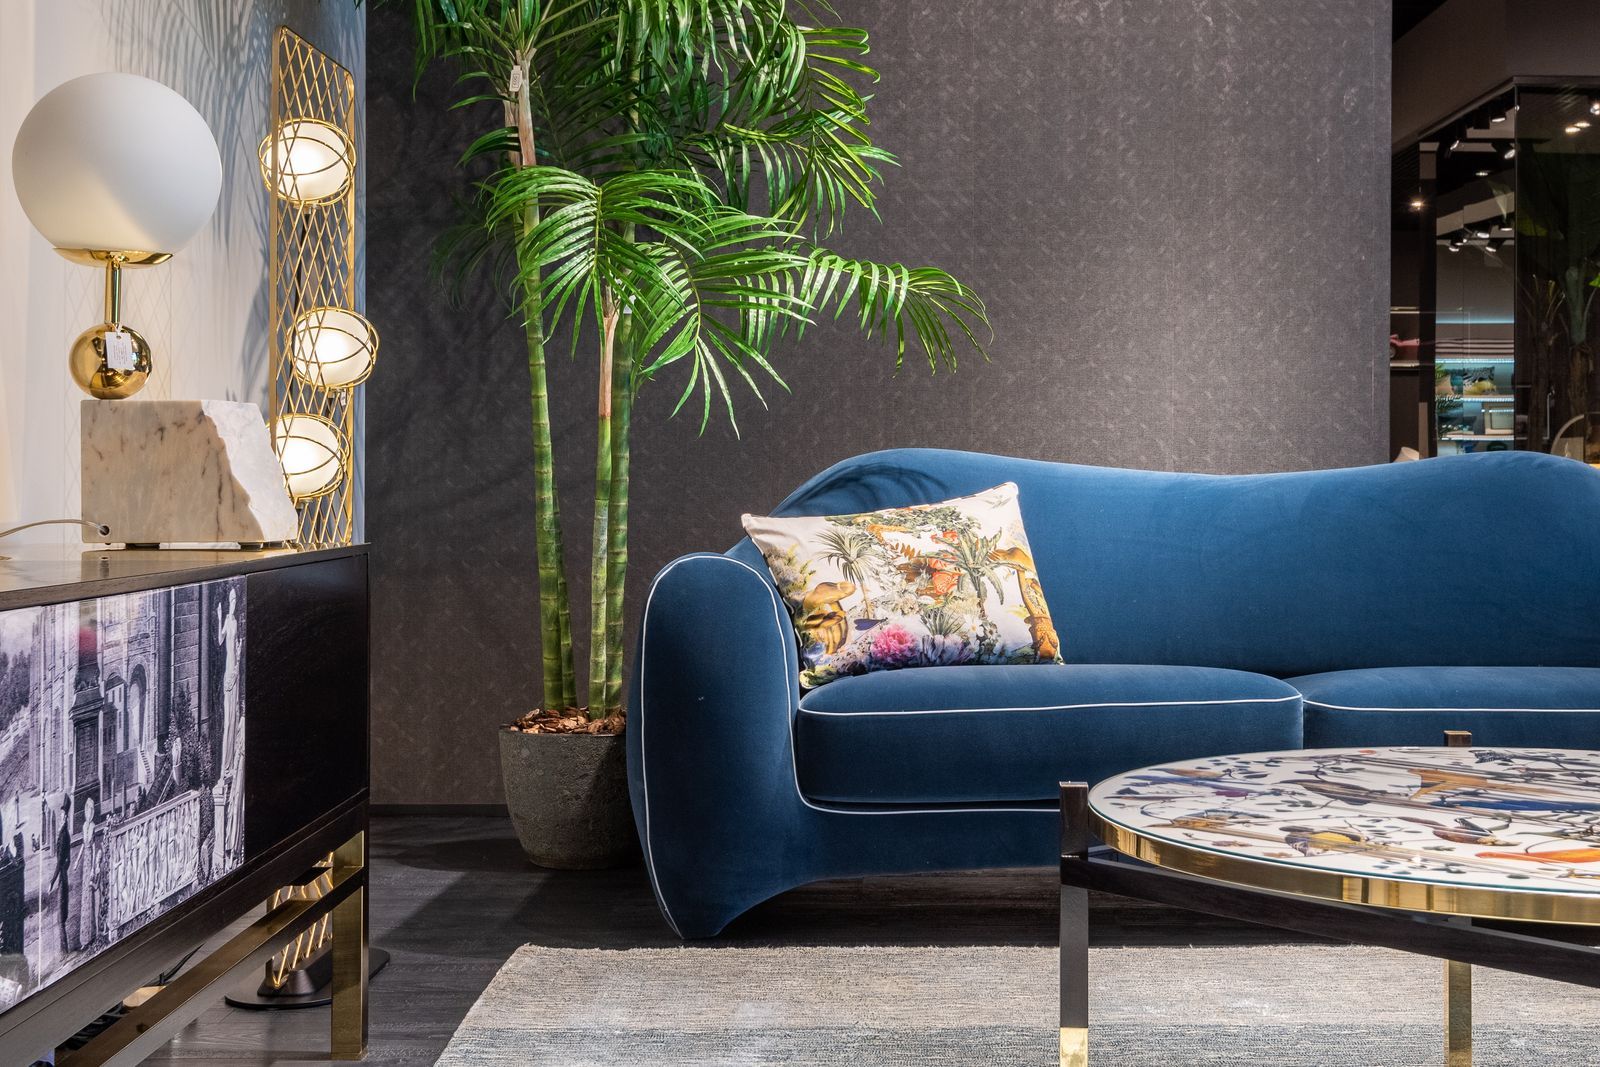 sala de estar decorada estilo glam con sofá azul y lámparas doradas